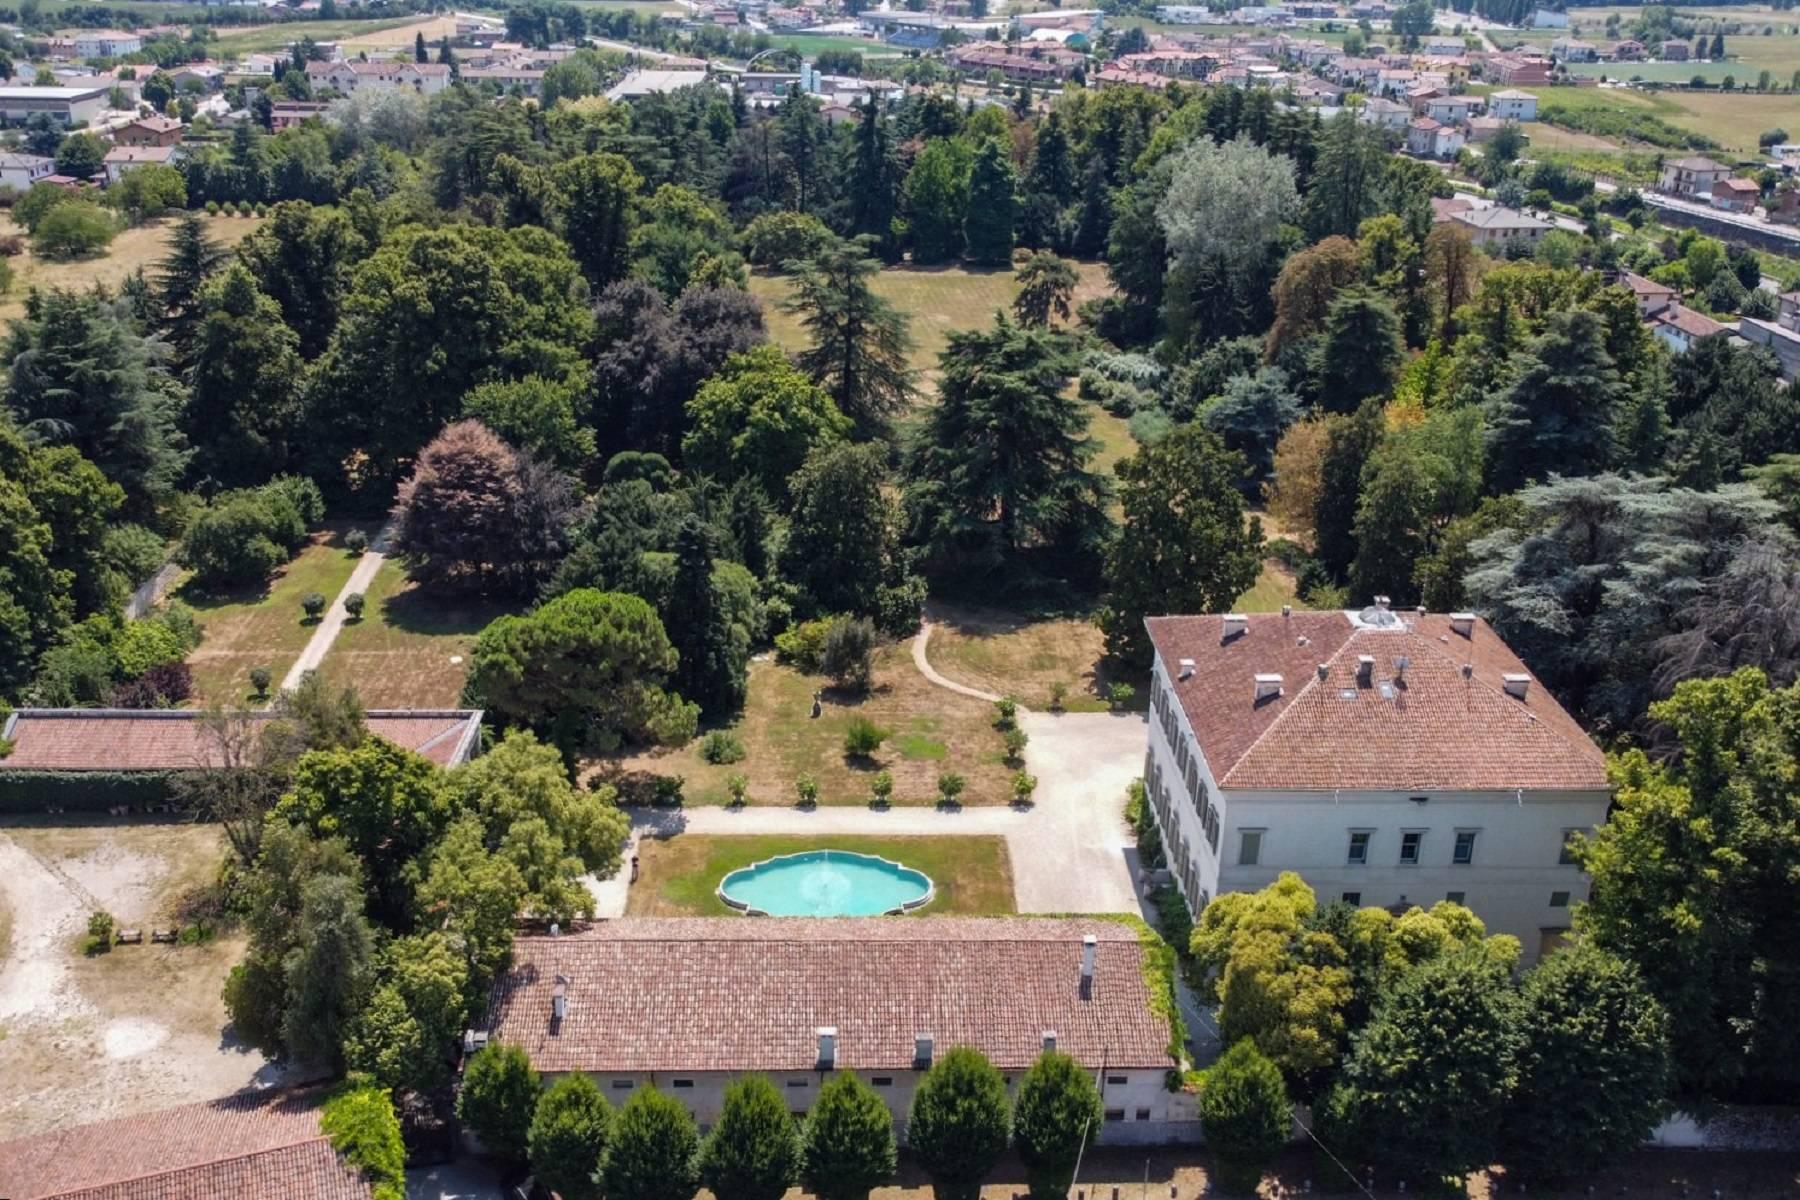 Elegante Villa Veneta con parco romantico e adiacenze - 33